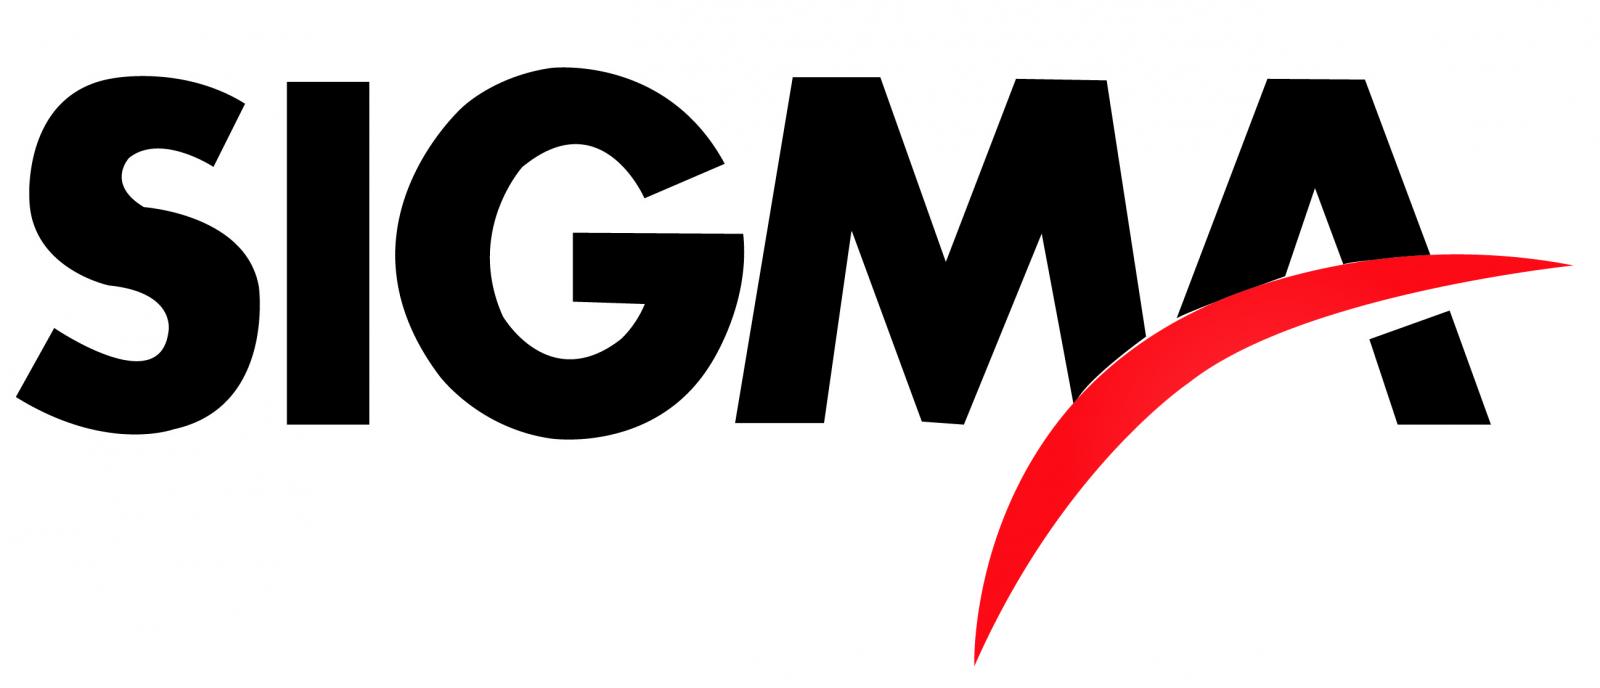 Www sigma. Sigma картинки. Sigma эмблема. Компания Сигма логотип. Атол Sigma лого.